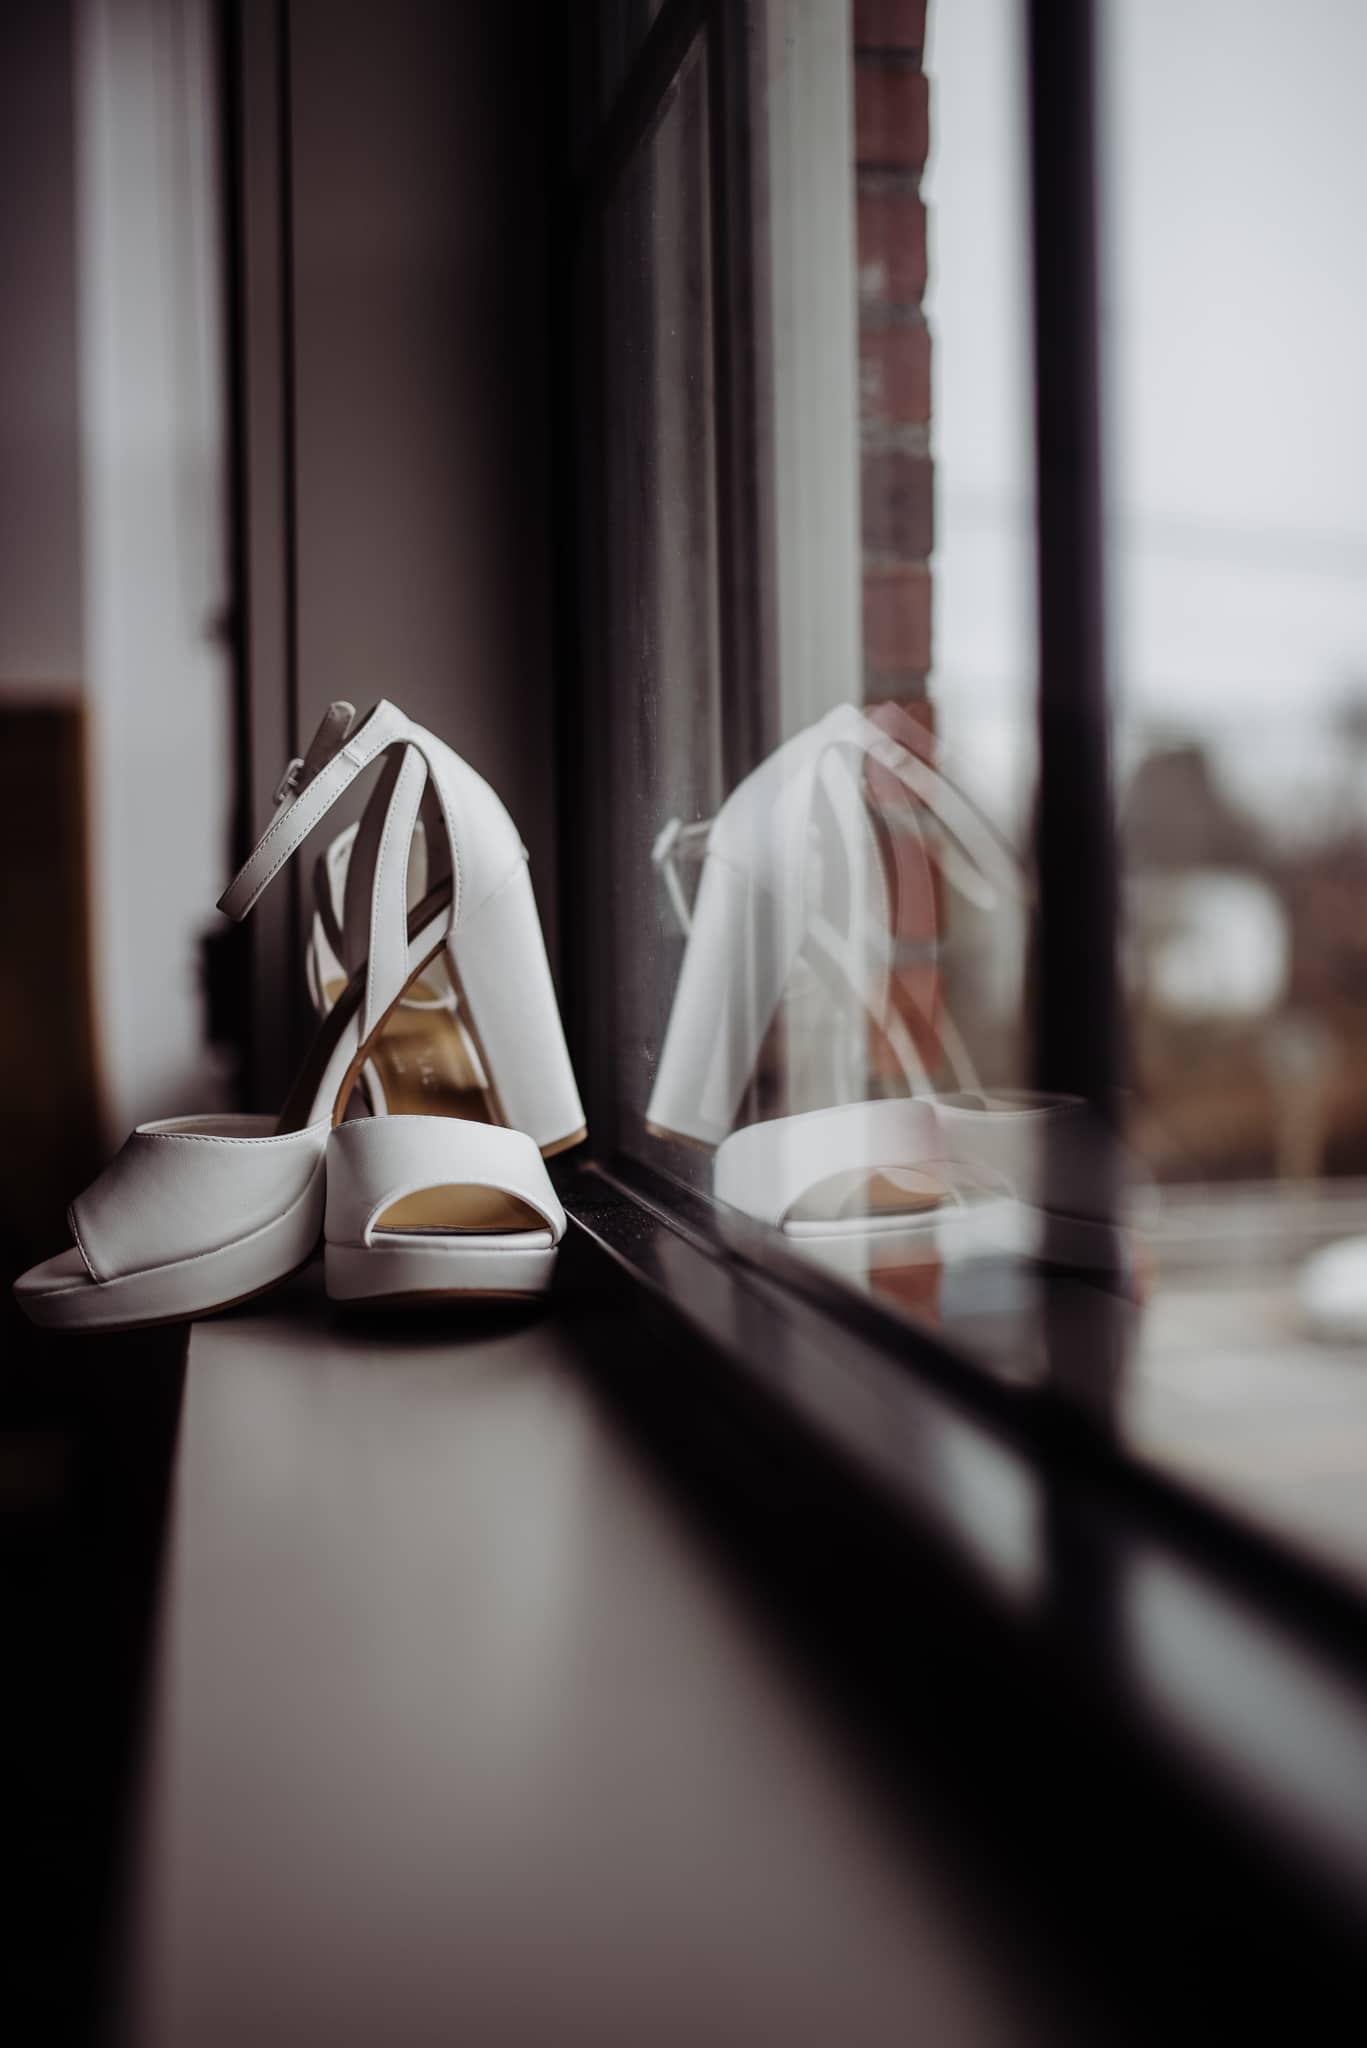 Wedding shoes sitting in window sill